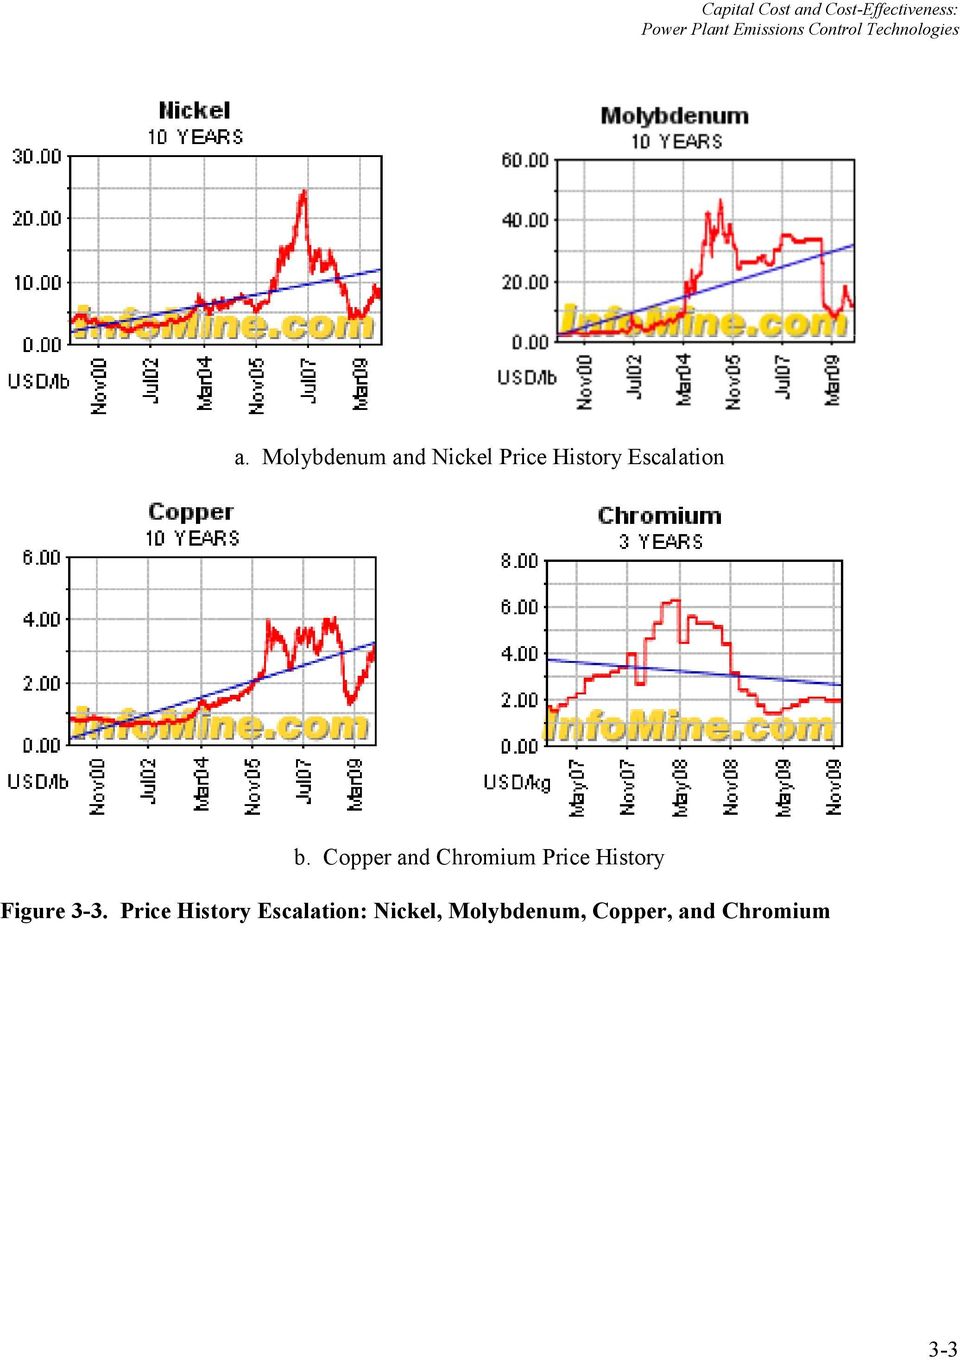 Copper and Chromium Price History Figure